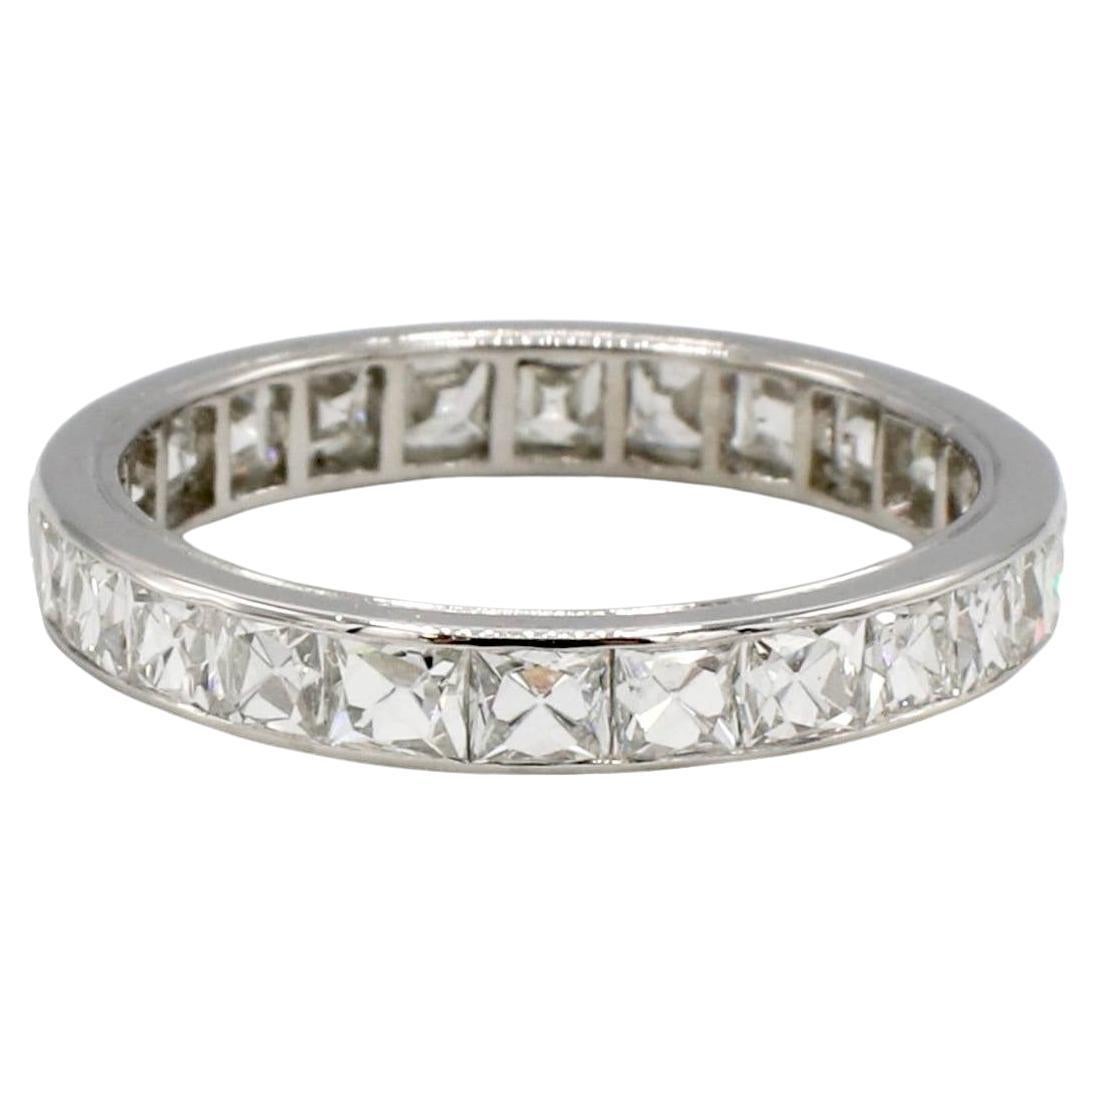 Platinum French Cut 2.50 Carat Natural Diamond Eternity Band Ring 
Metal:l Platinum
Diamonds: 2.50 CTW French Cut F-G VS natural diamonds
Size: 7 (US)
Width: 3.2mm
Weight: 2.95 grams
